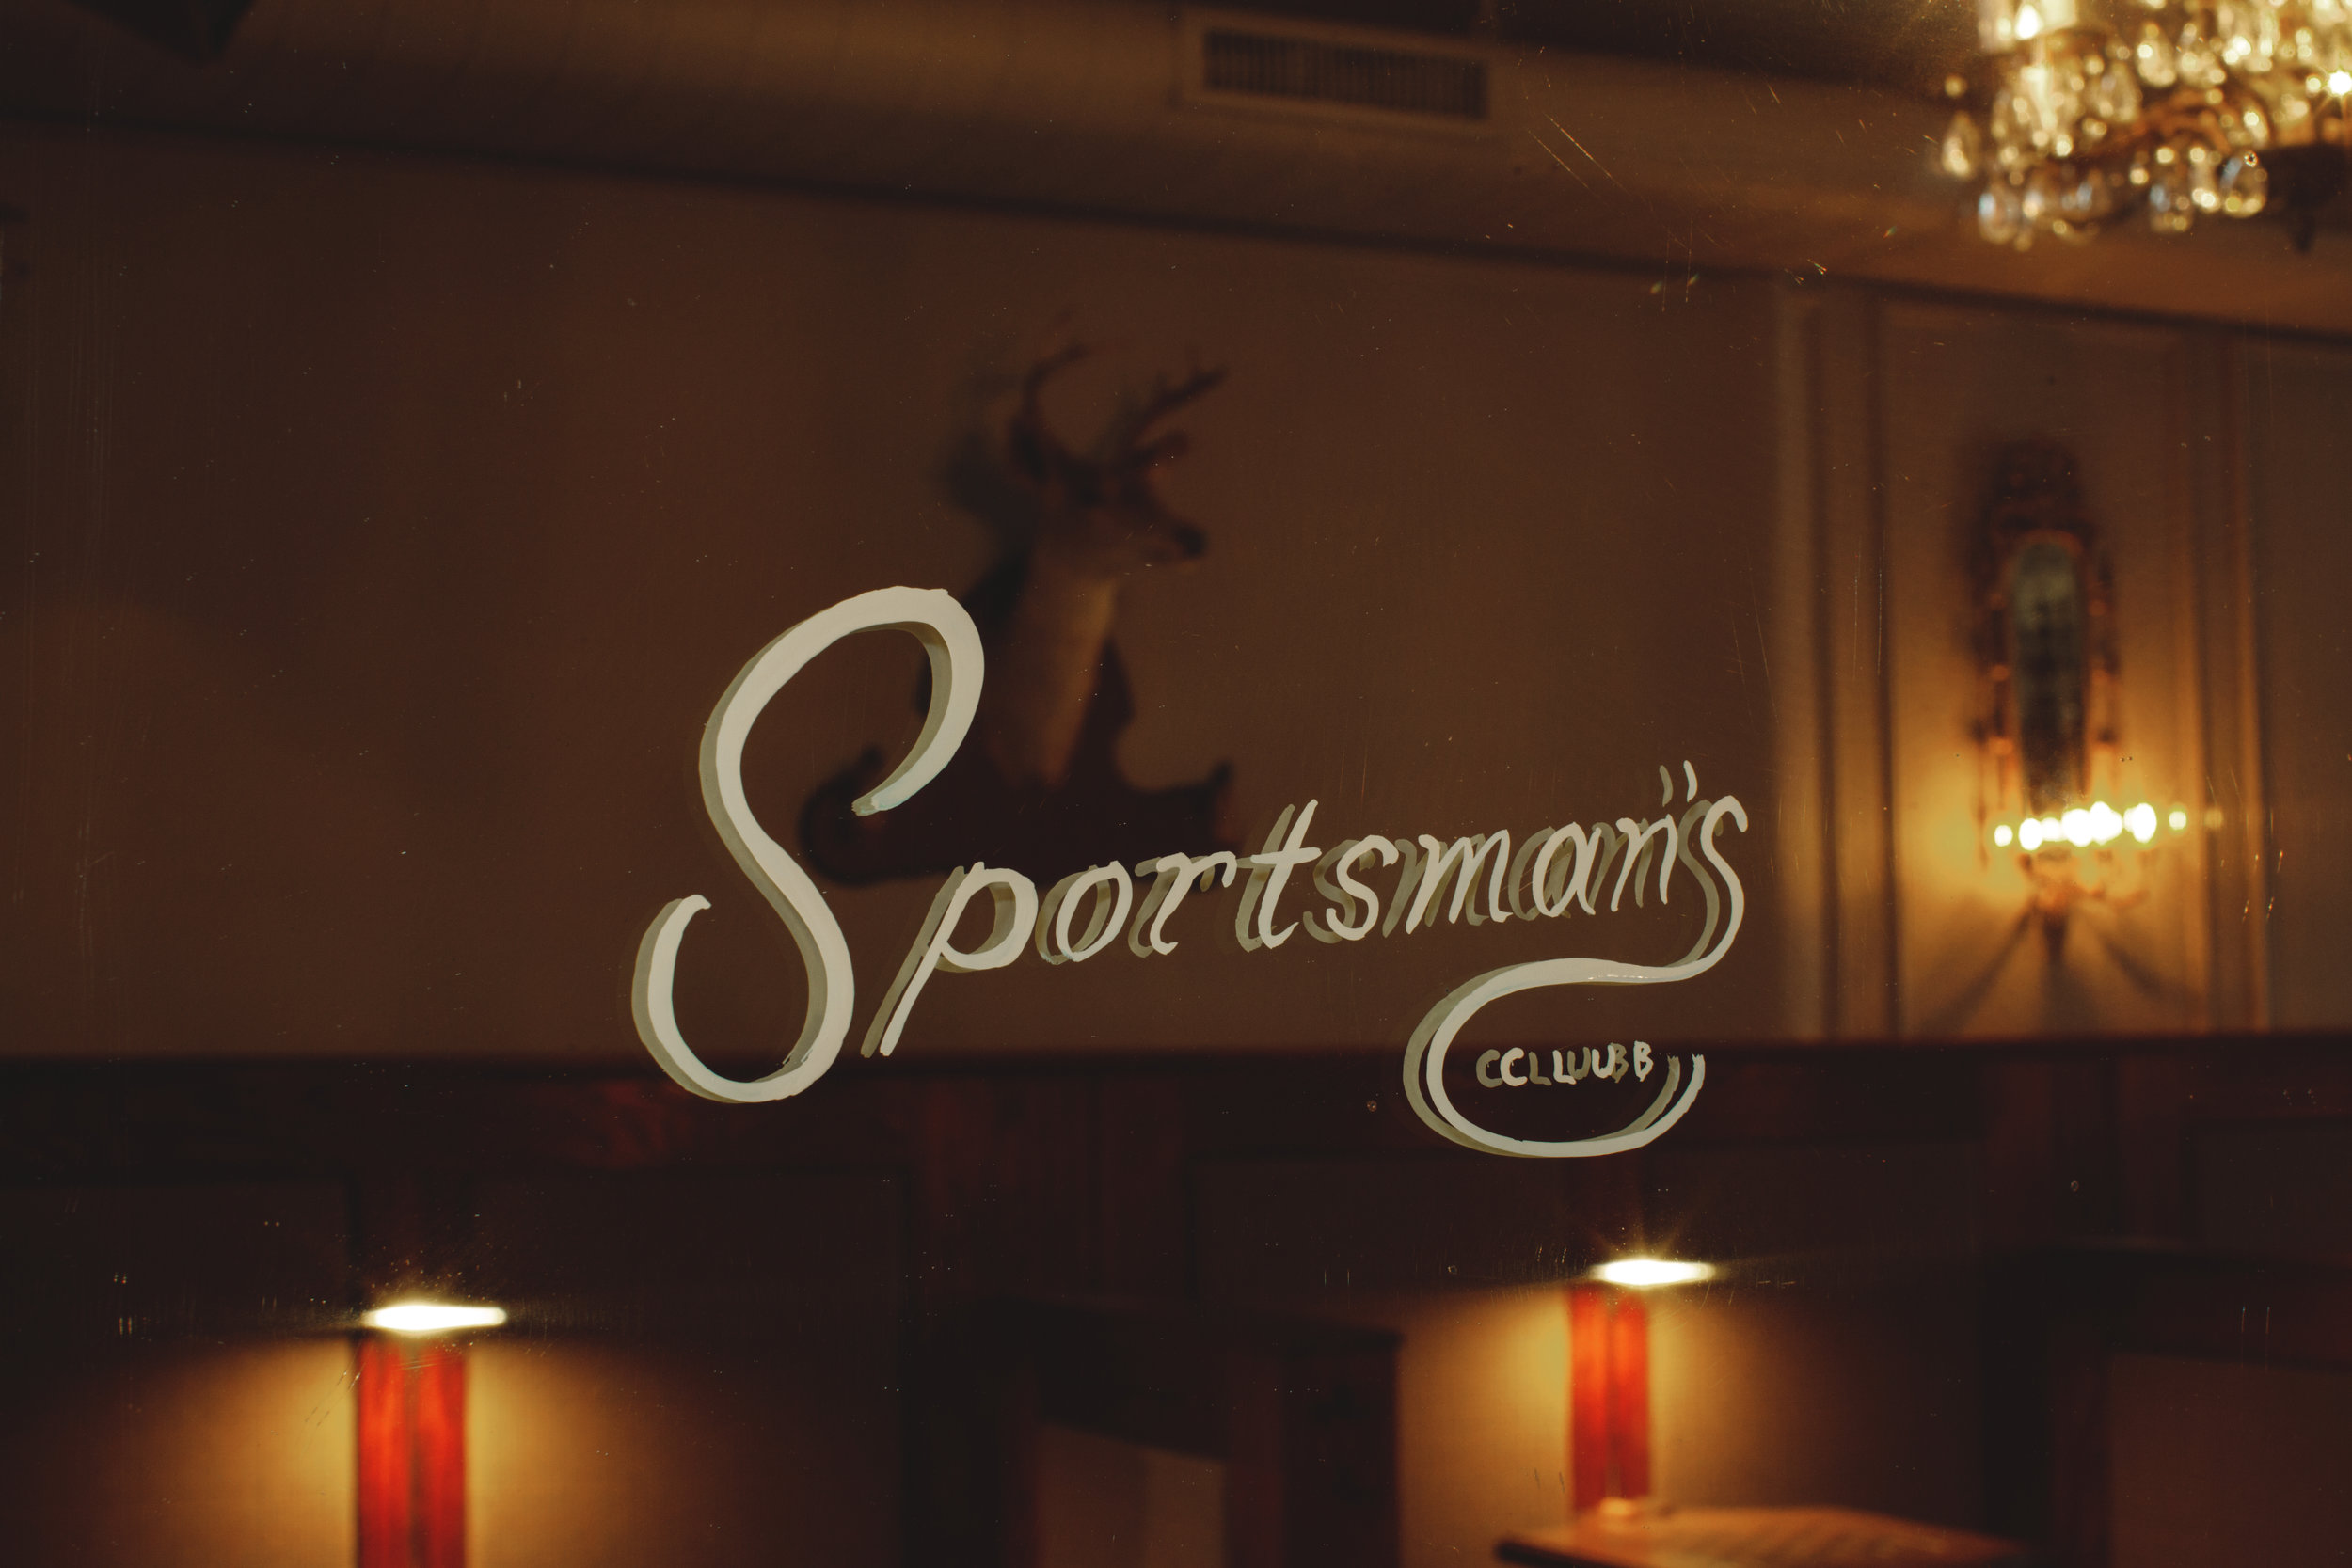 028 Sportsmans Club.jpg